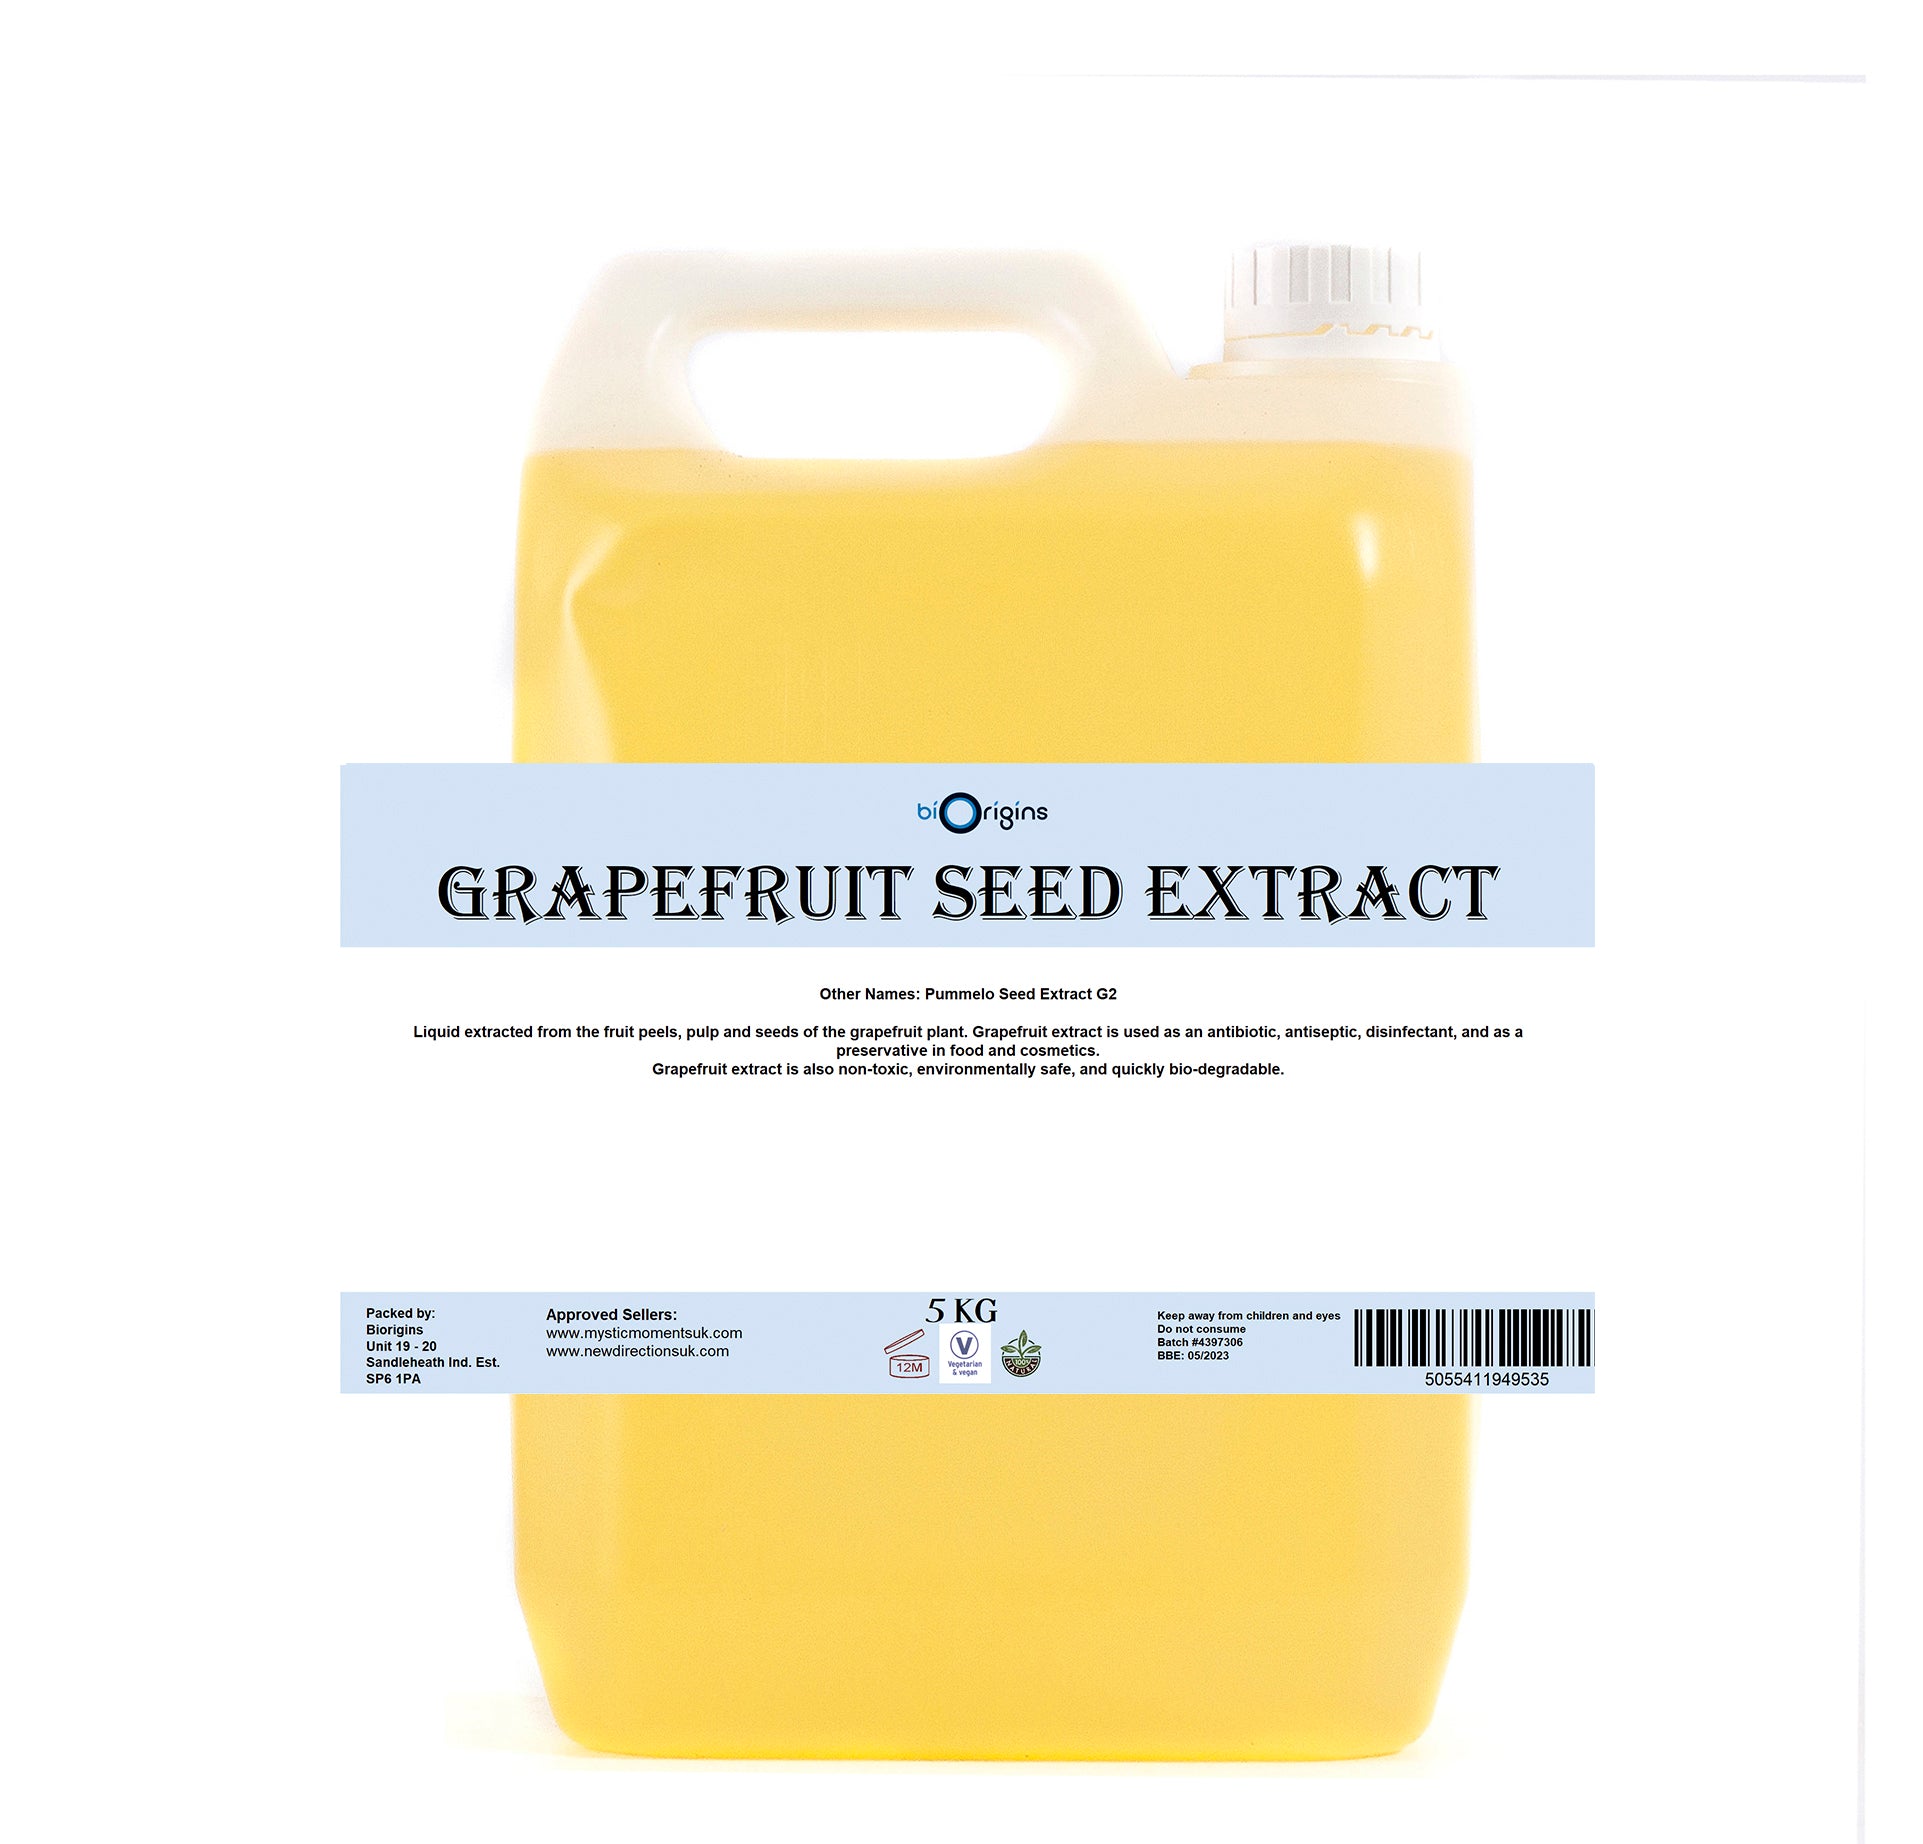 grapefruit seed extract reddit